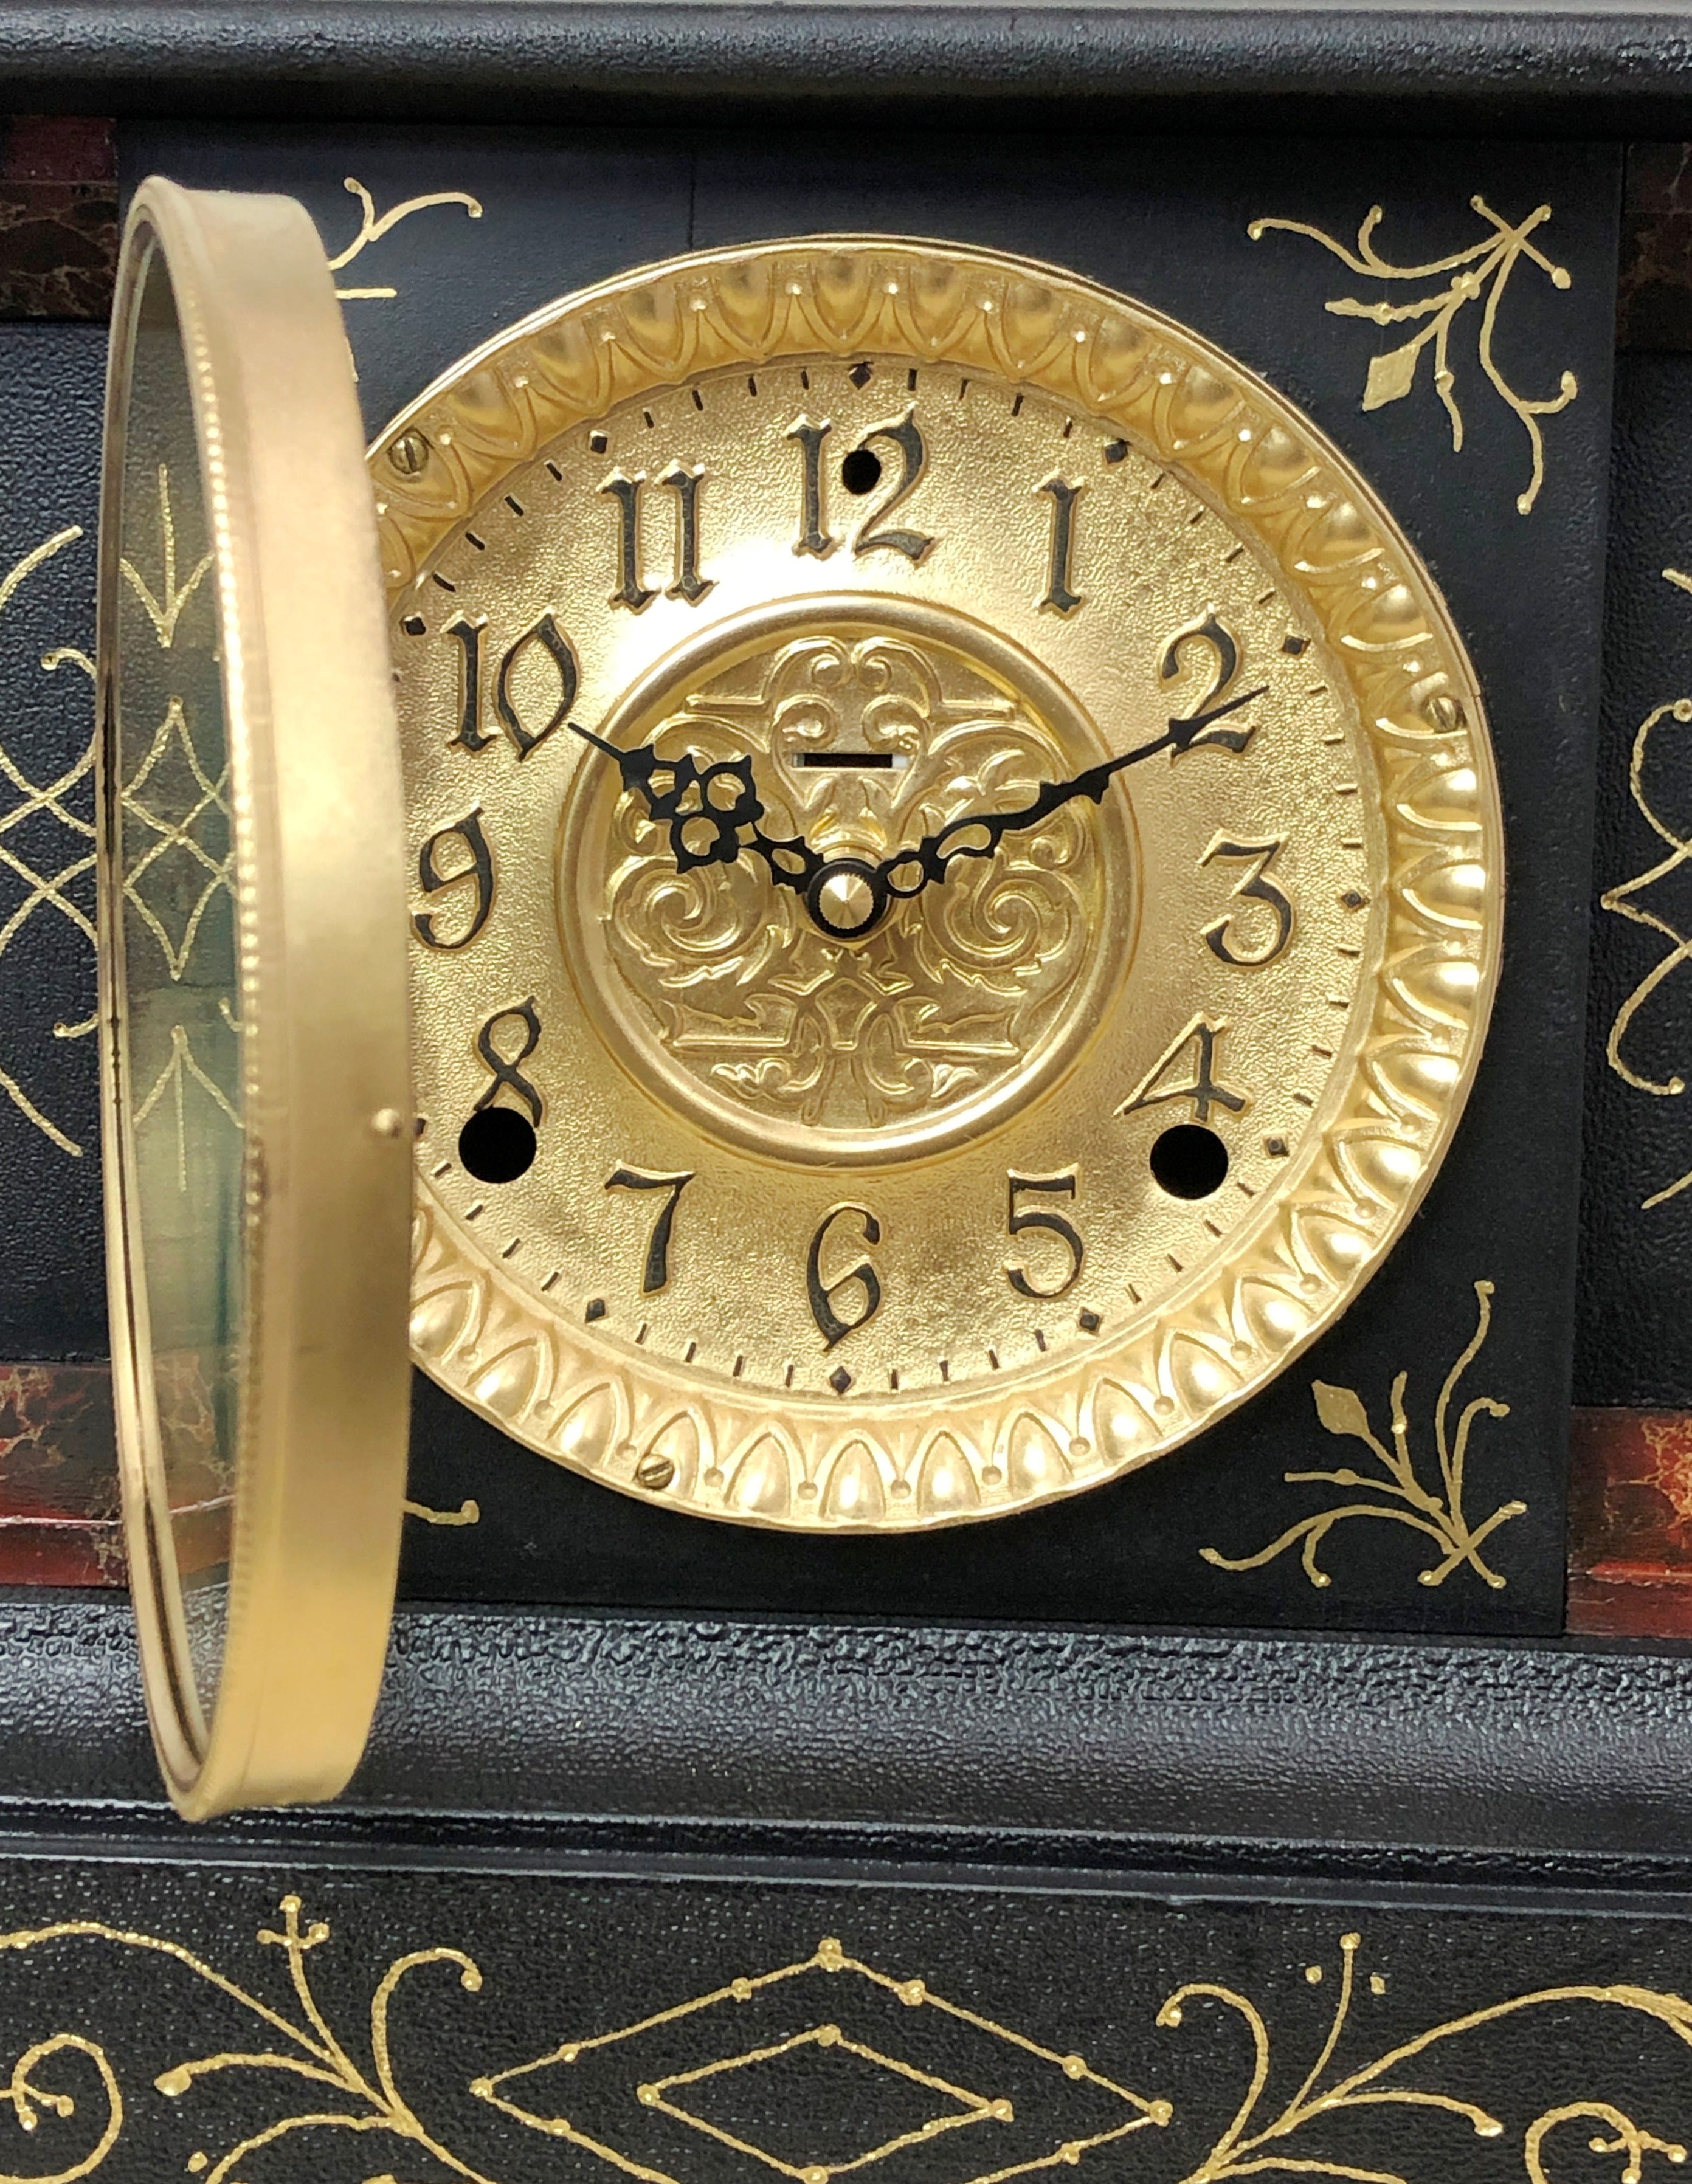 Antique Ingraham Battery Mantel Clock | eXibit collection